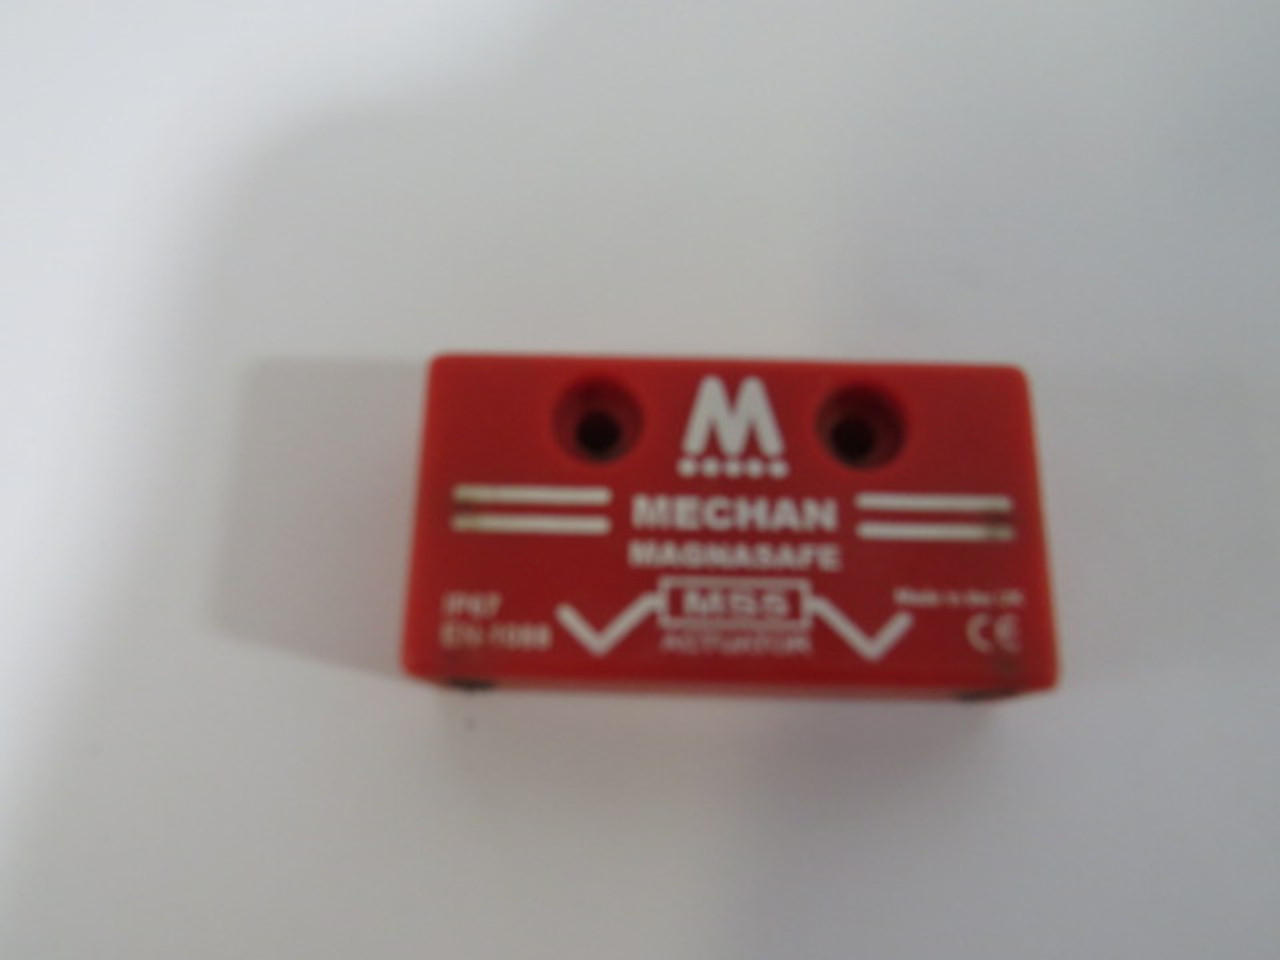 Merchan MS5 Magnasafe Actuator USED